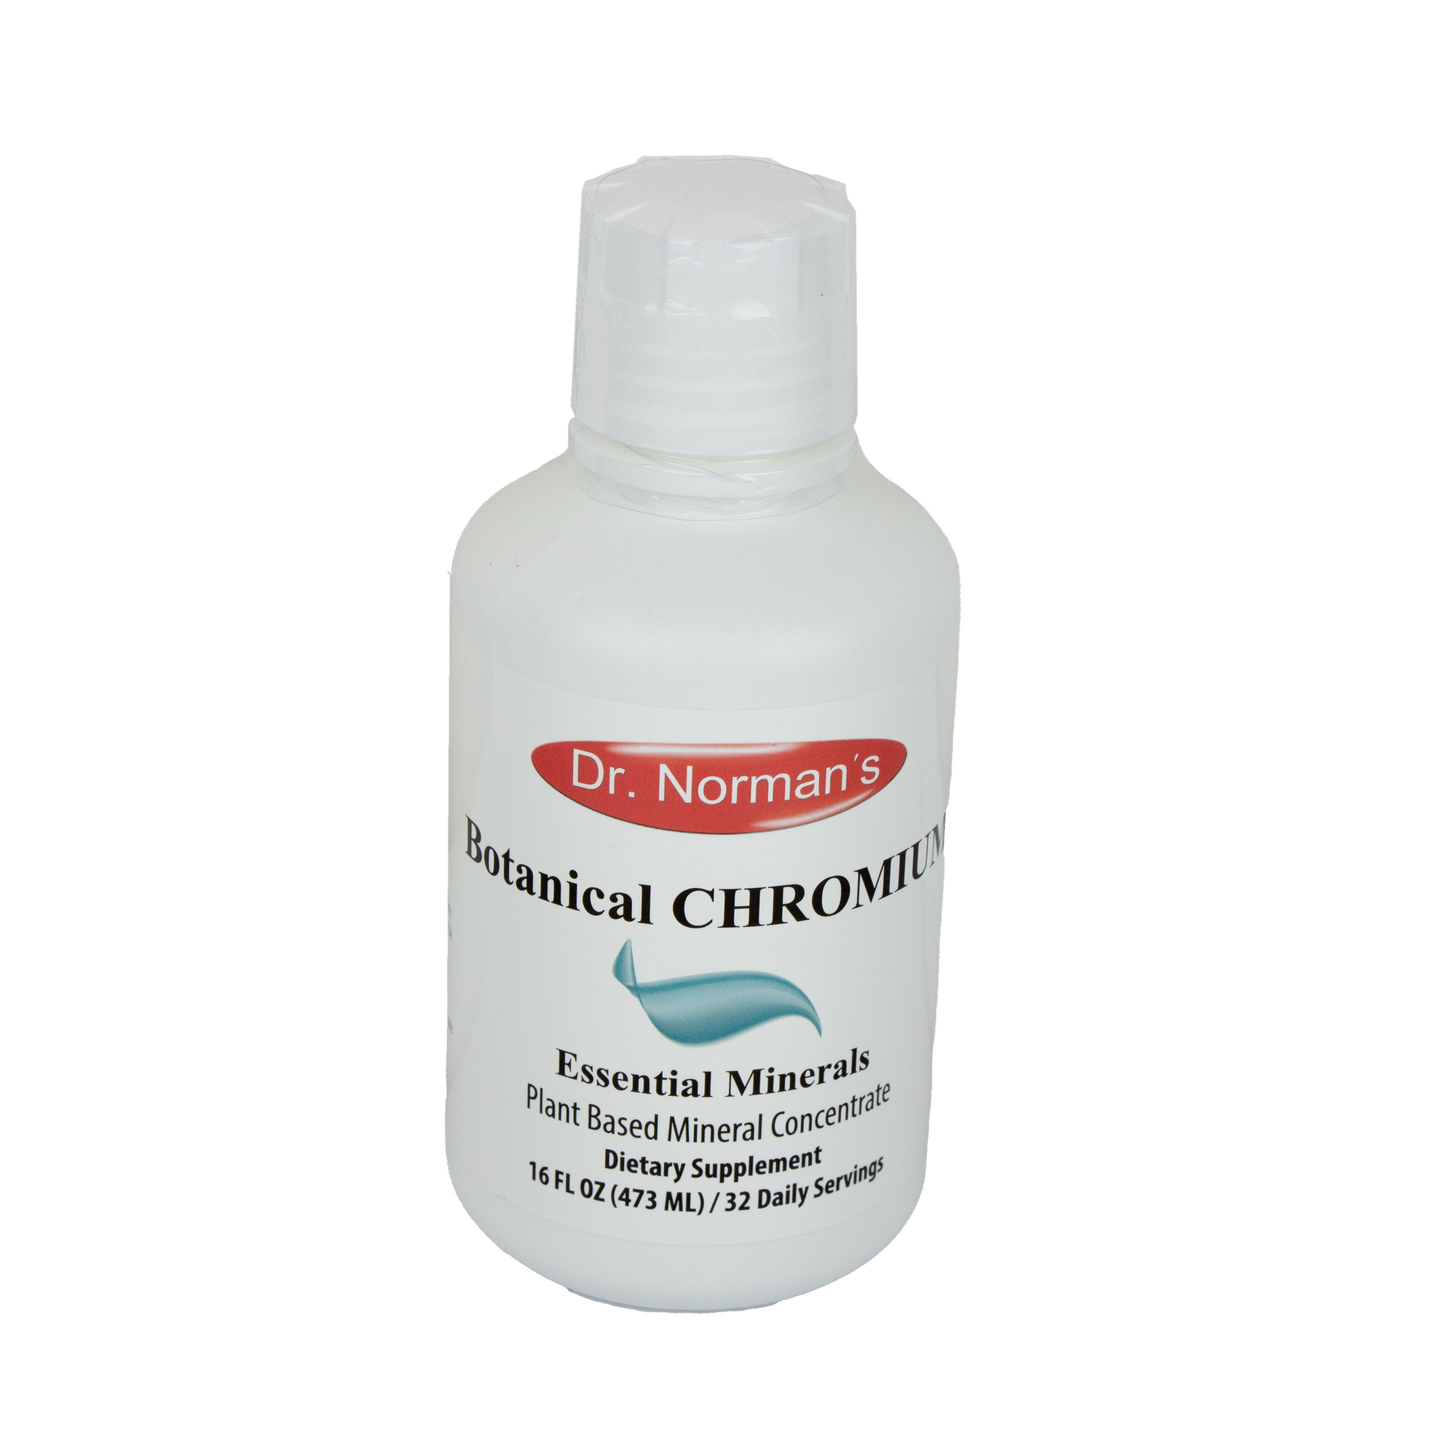 Dr. Norman's Essential Minerals - Botanical Chromium (16 oz)